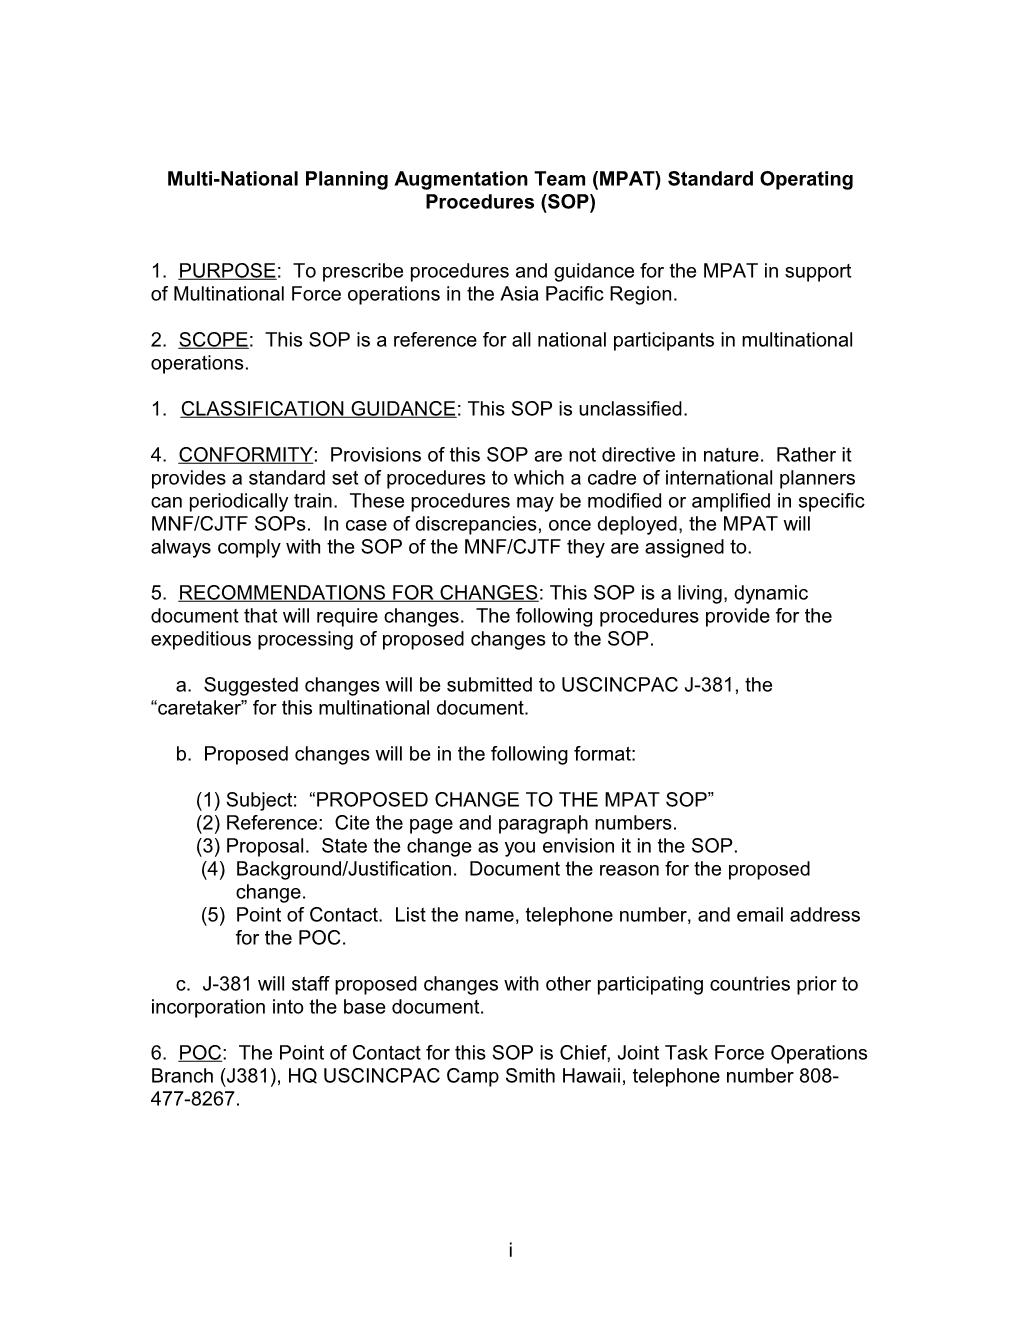 Multi-National Planning Augmentation Team (MPAT) Standard Operating Procedures (SOP)